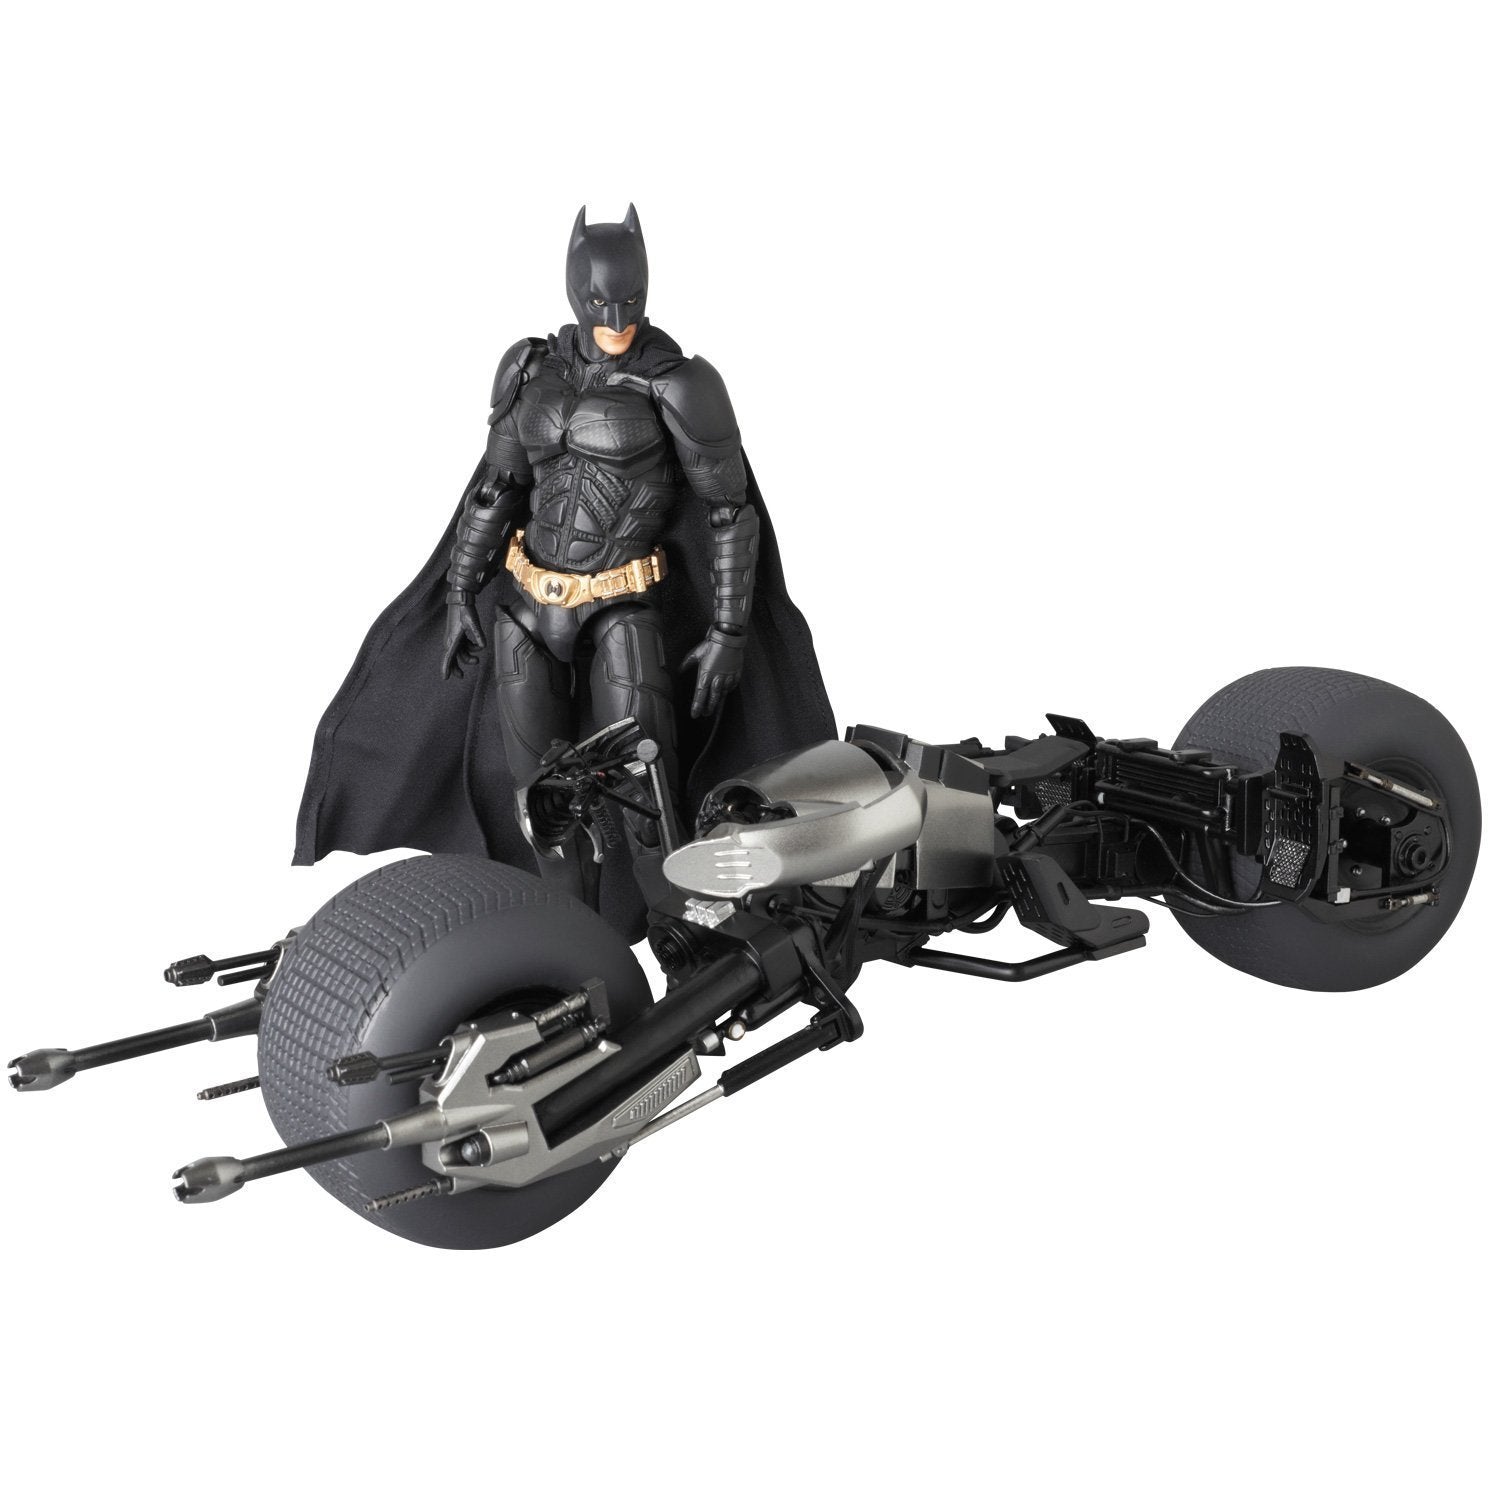 Mafex Medicom The Dark Knight: Batpod Mafex Vehicle Collectibles